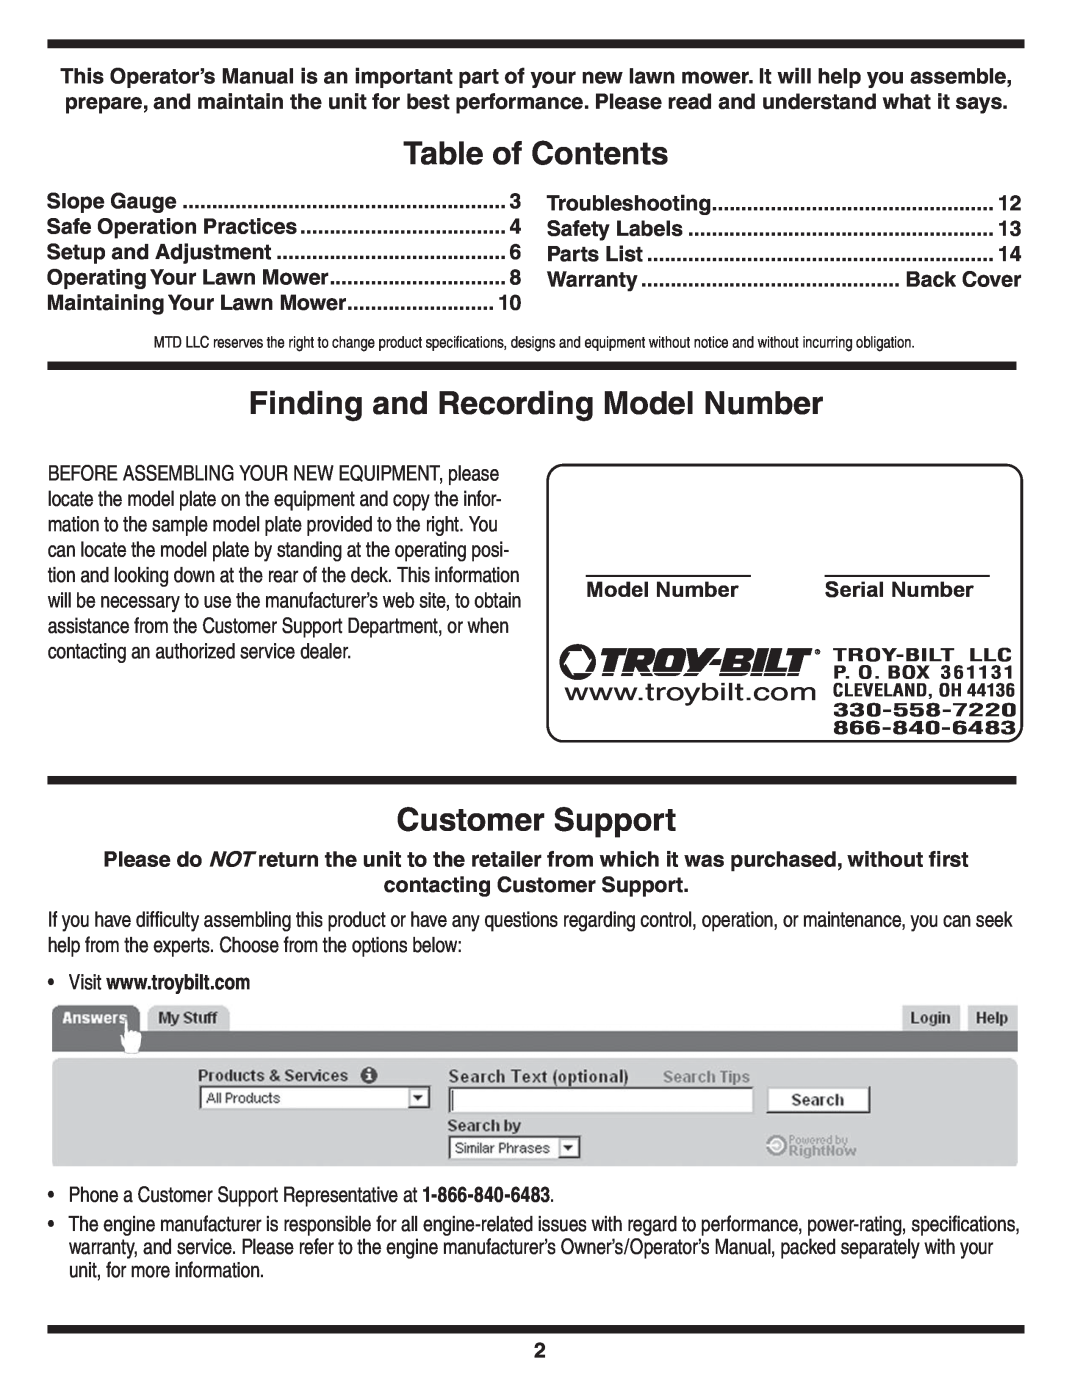 Troy-Bilt 429 Table of Contents, Finding and Recording Model Number, Customer Support, Slope Gauge, Setup and Adjustment 